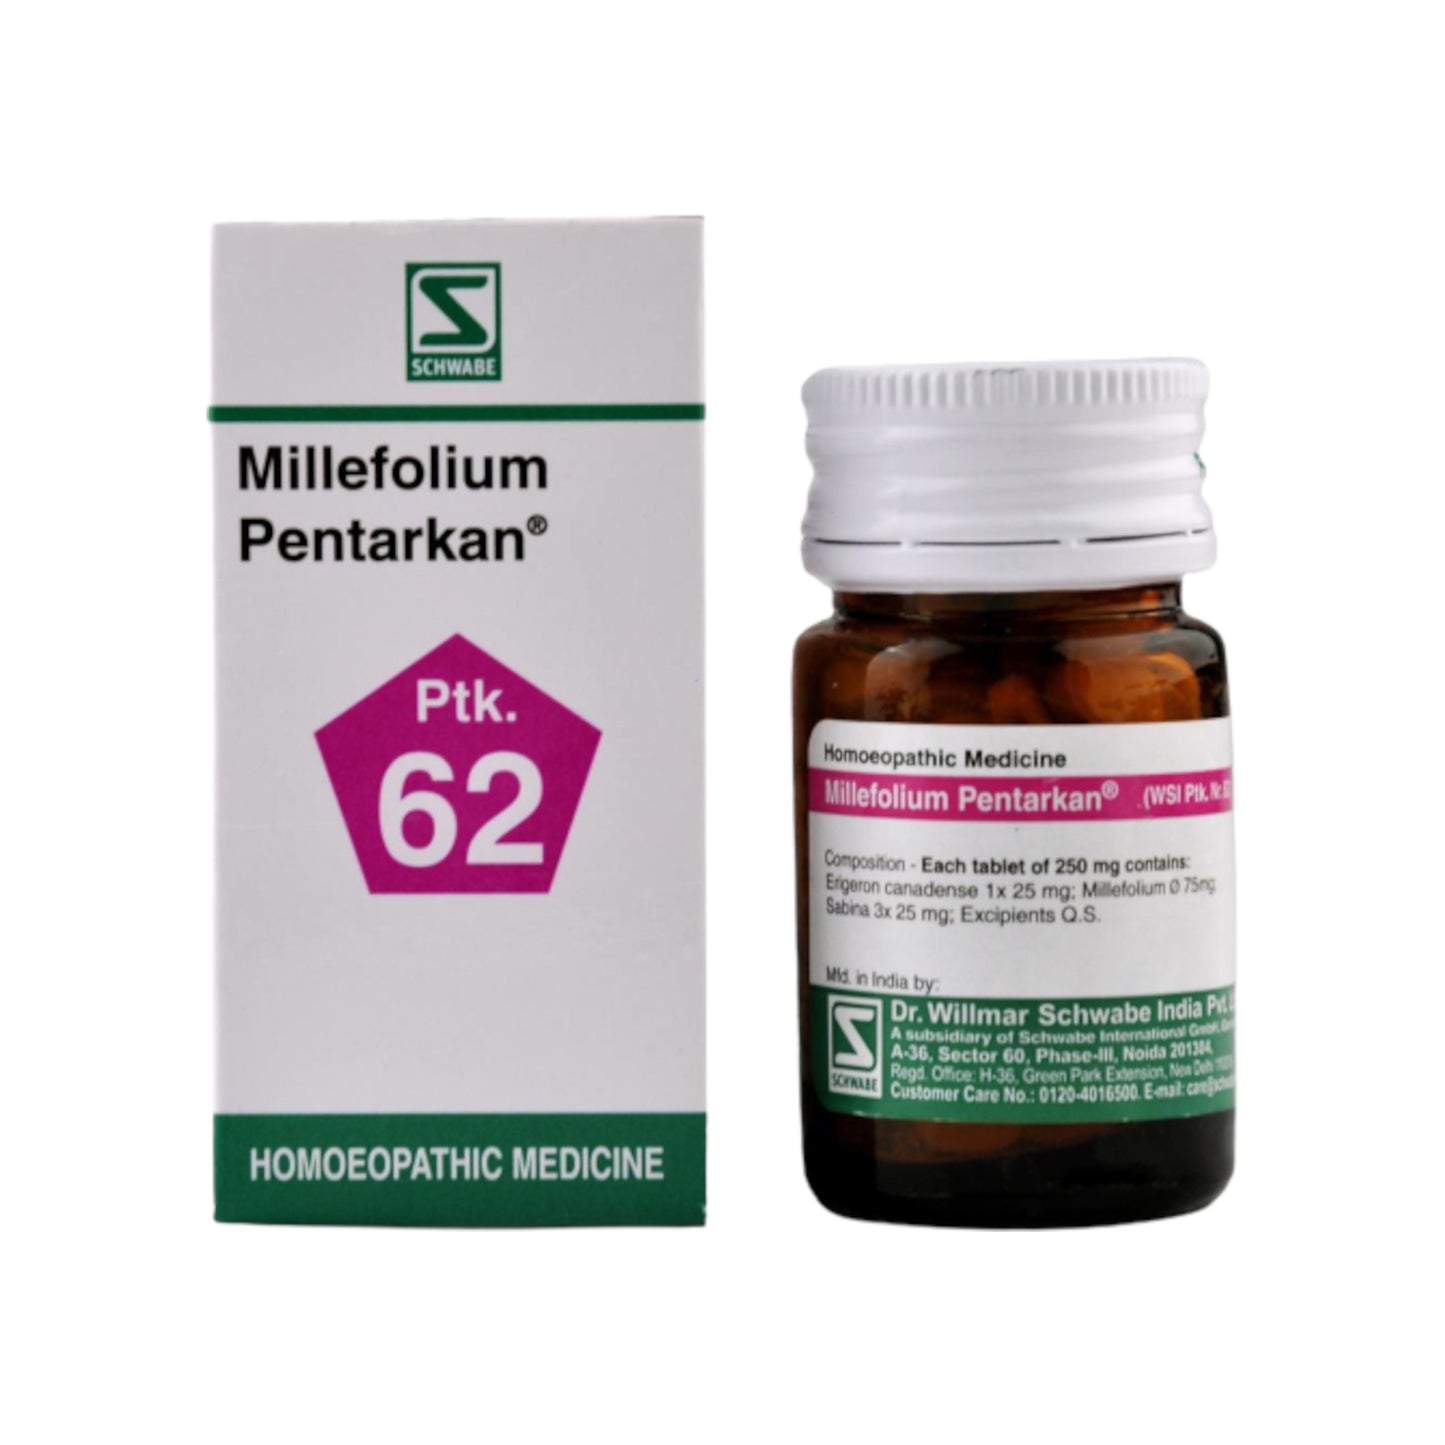 Image: Dr. Schwabe Homeopathy Millefolium Pentarkan Tablets 20 g - Solution for heavy menstrual bleeding and nosebleeds.